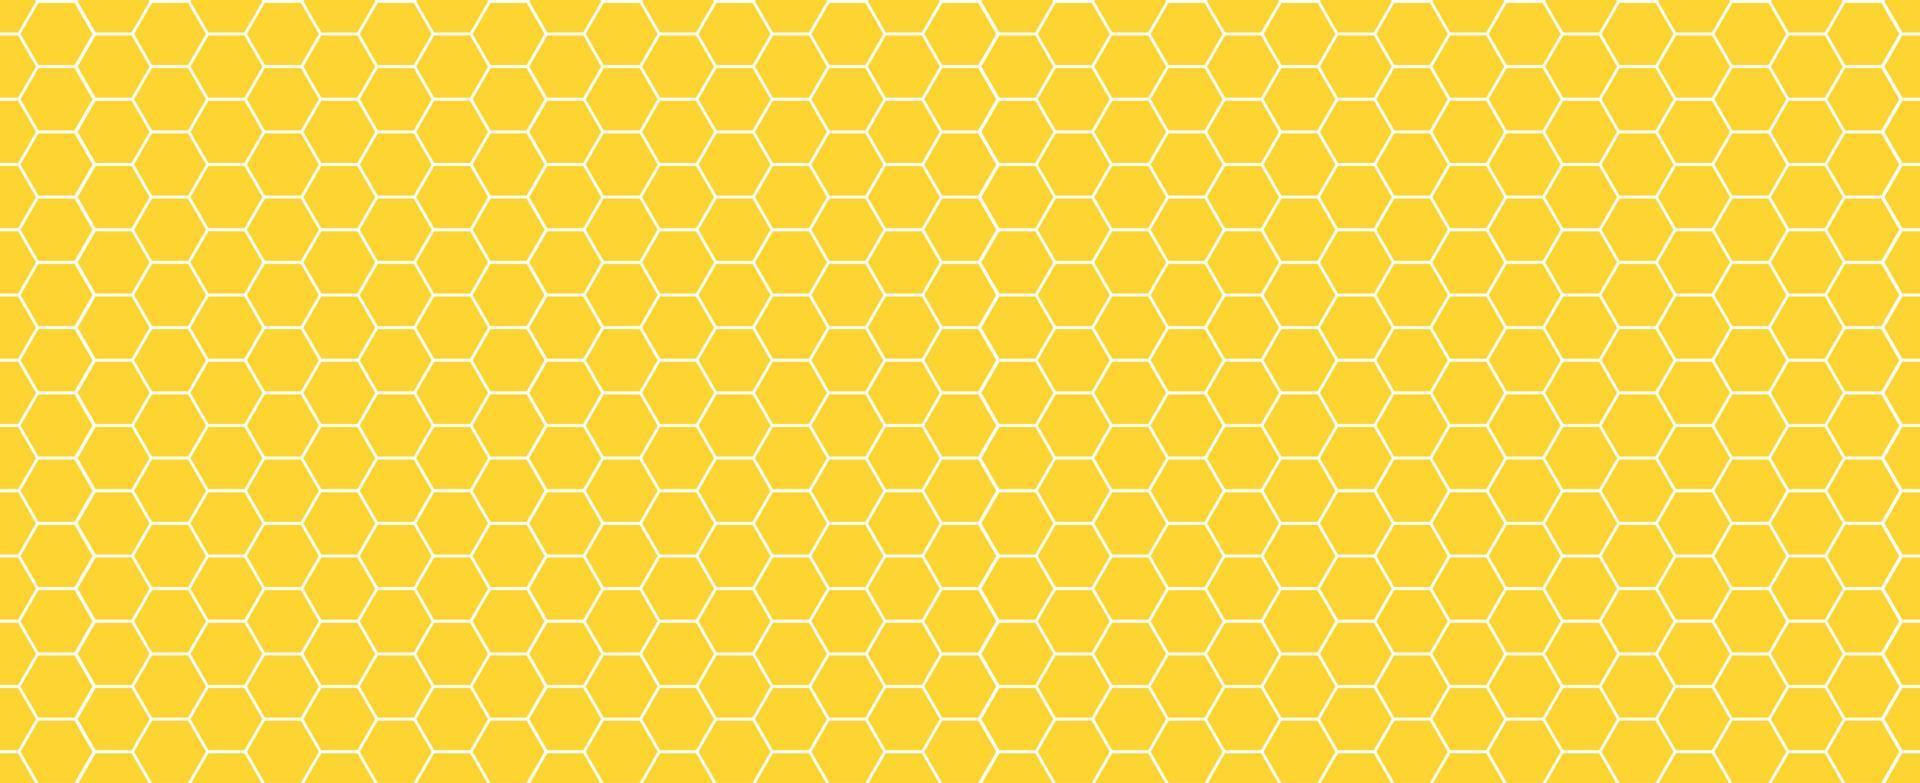 Honeycomb seamless pattern background. Honey hexagon texture. Vector illustration